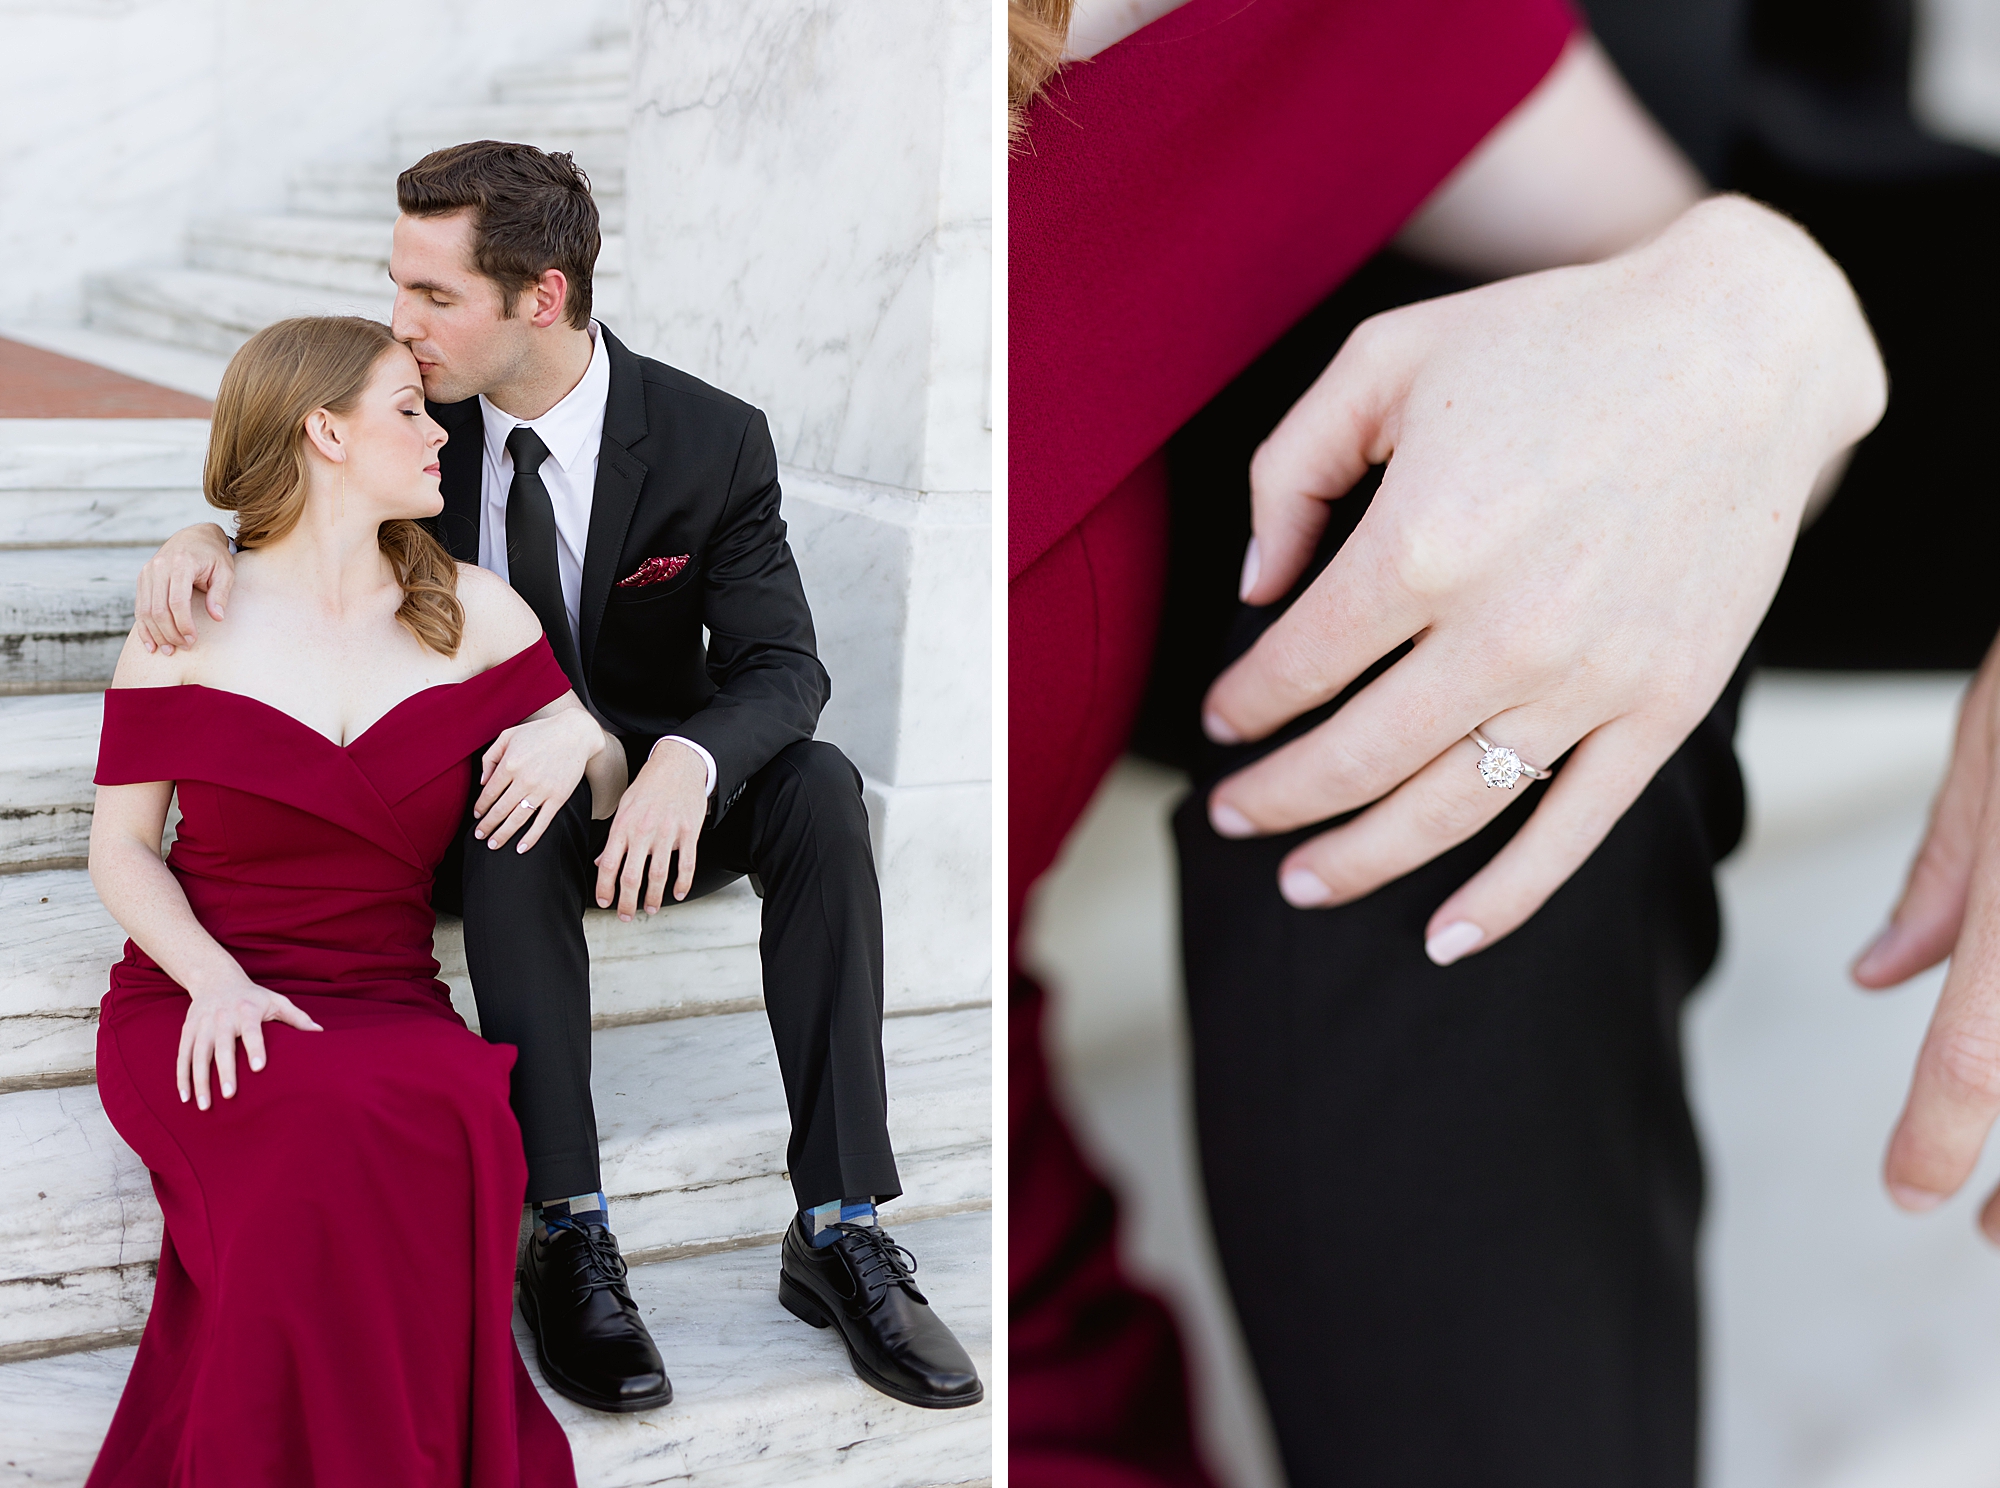 Engagement Ring photos | Downtown Detroit | Breanne Rochelle Photography